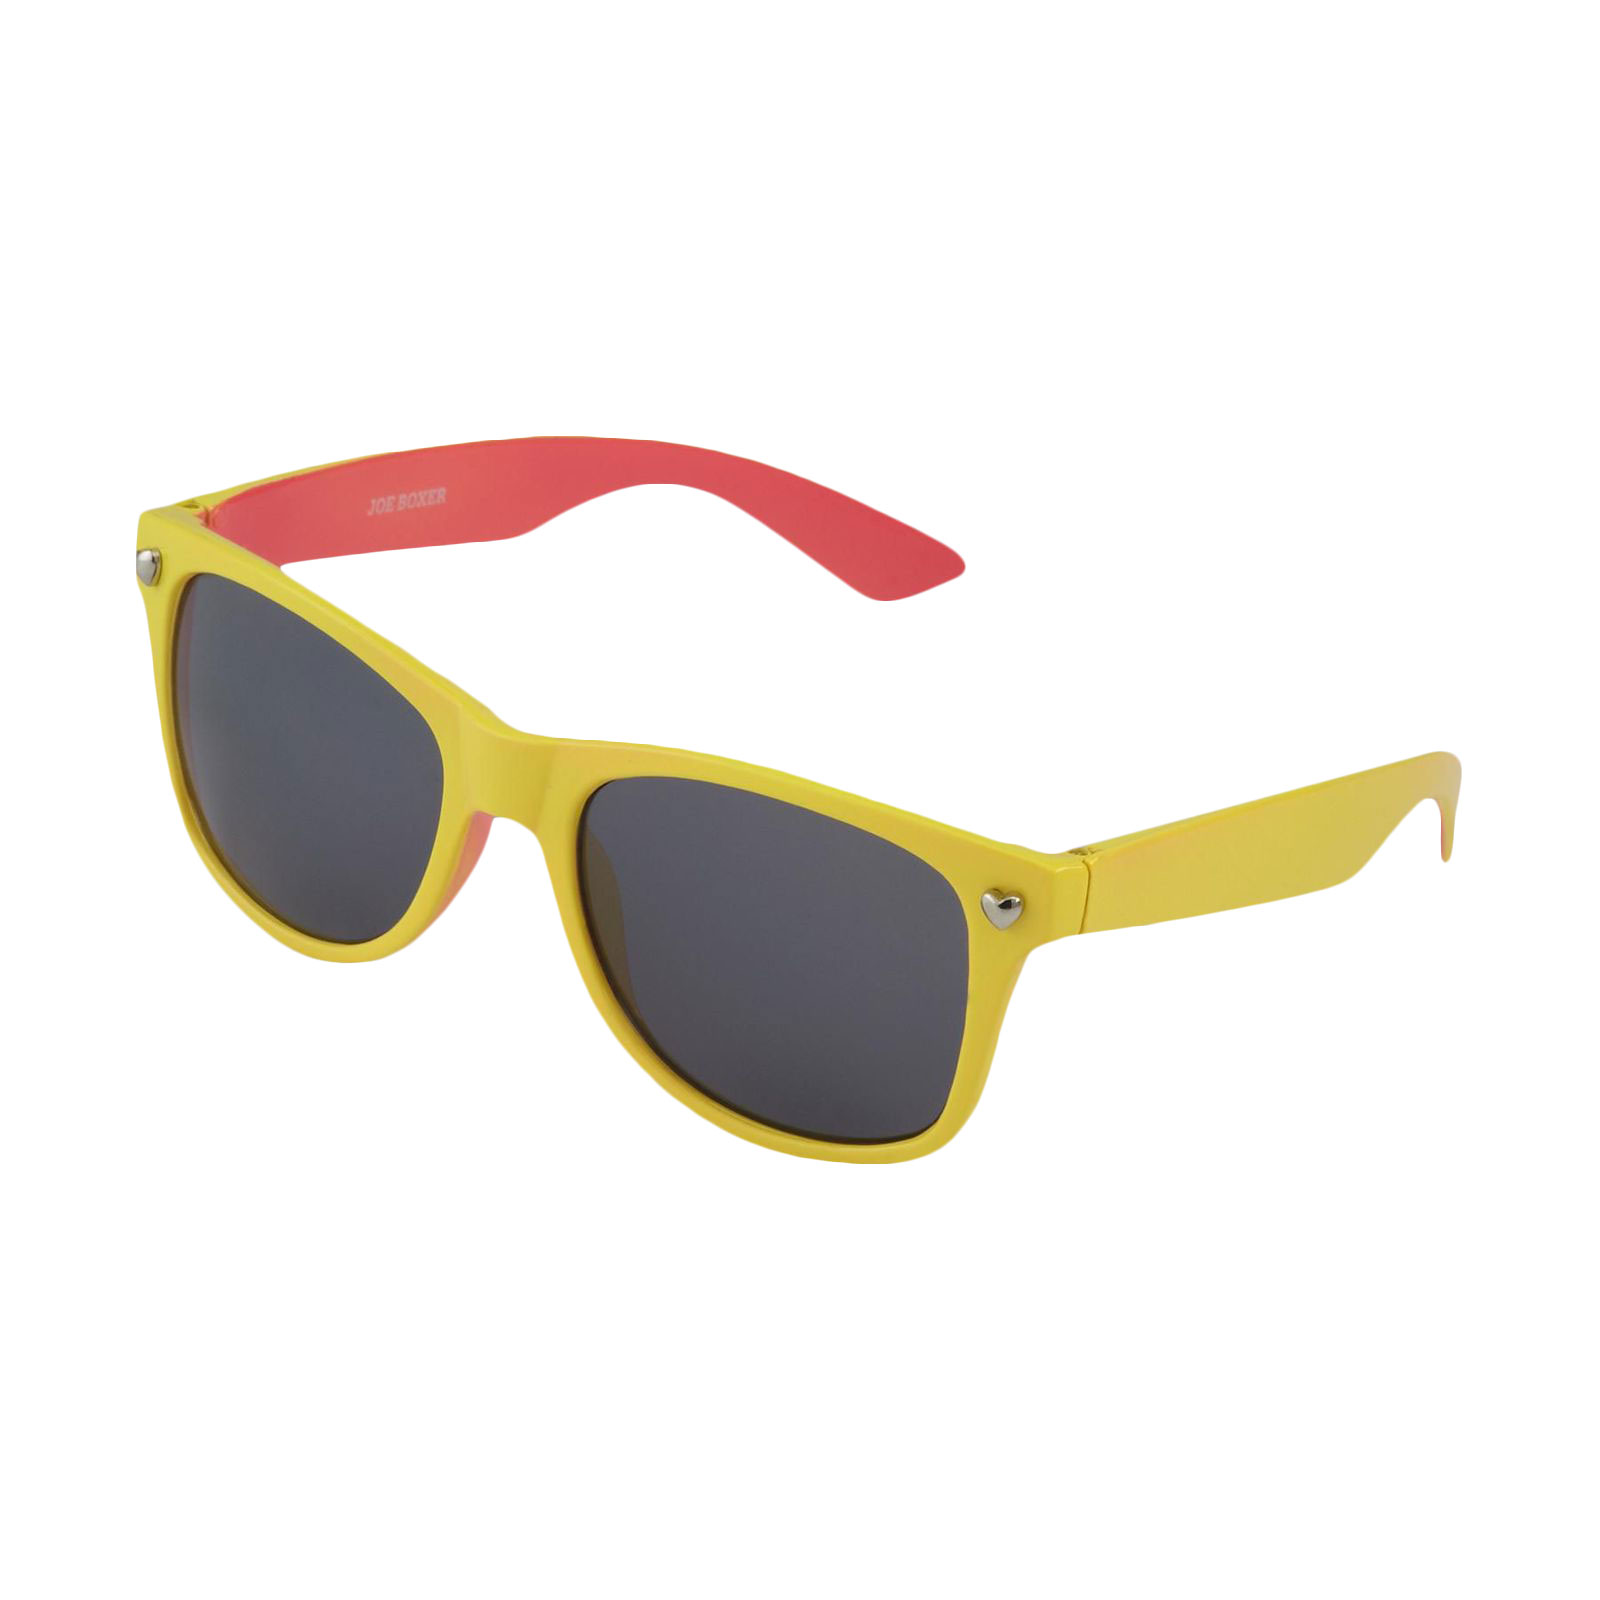 Joe Boxer Women's Neon Yellow & Orange Retro Sunglasses